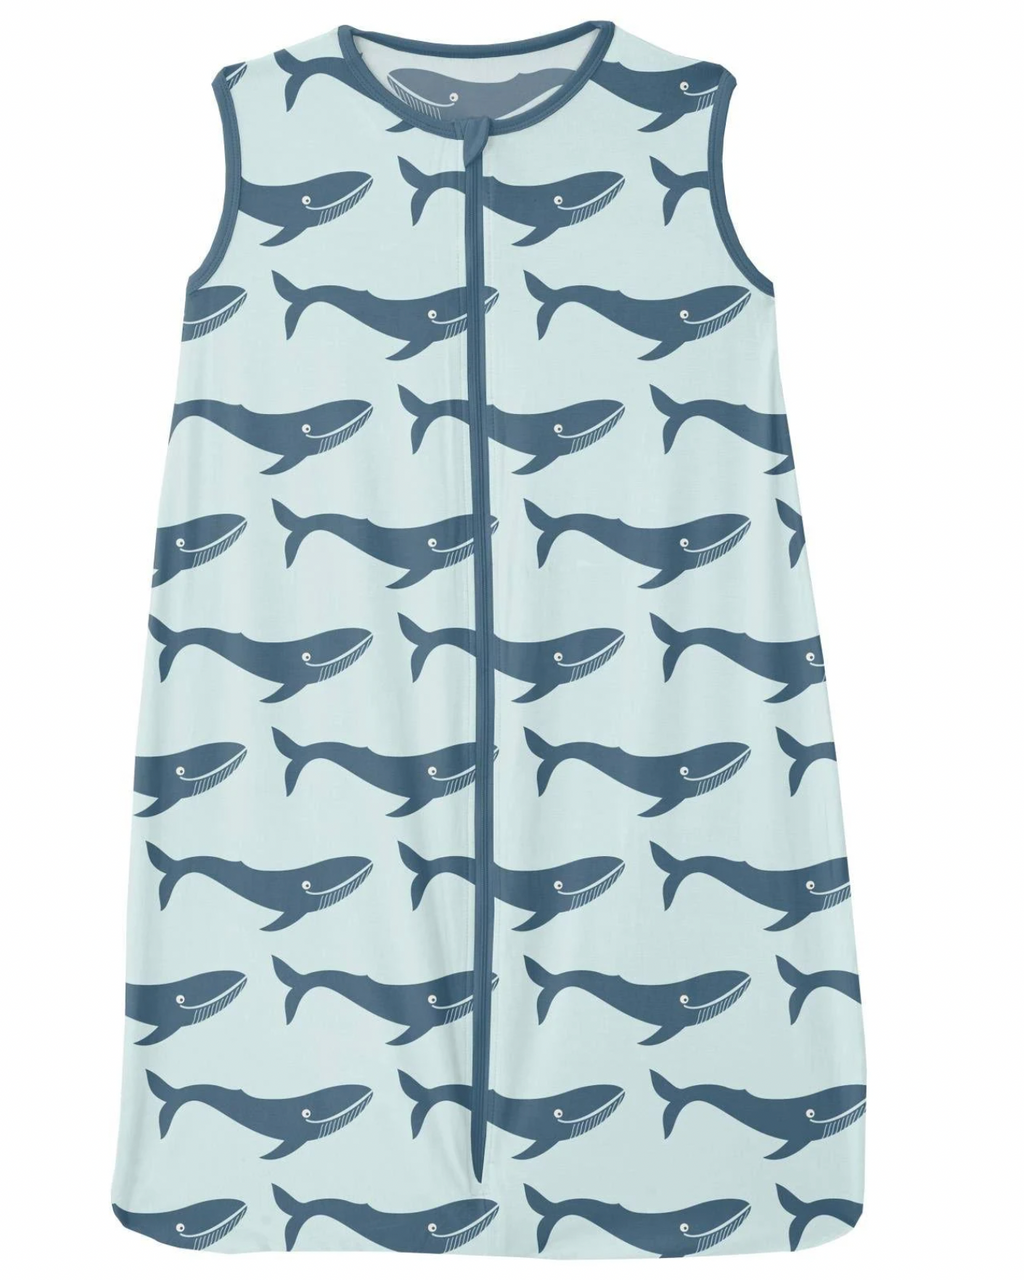 Kickee Pants Print Lightweight Sleeping Bag - Fresh Air Blue Whales